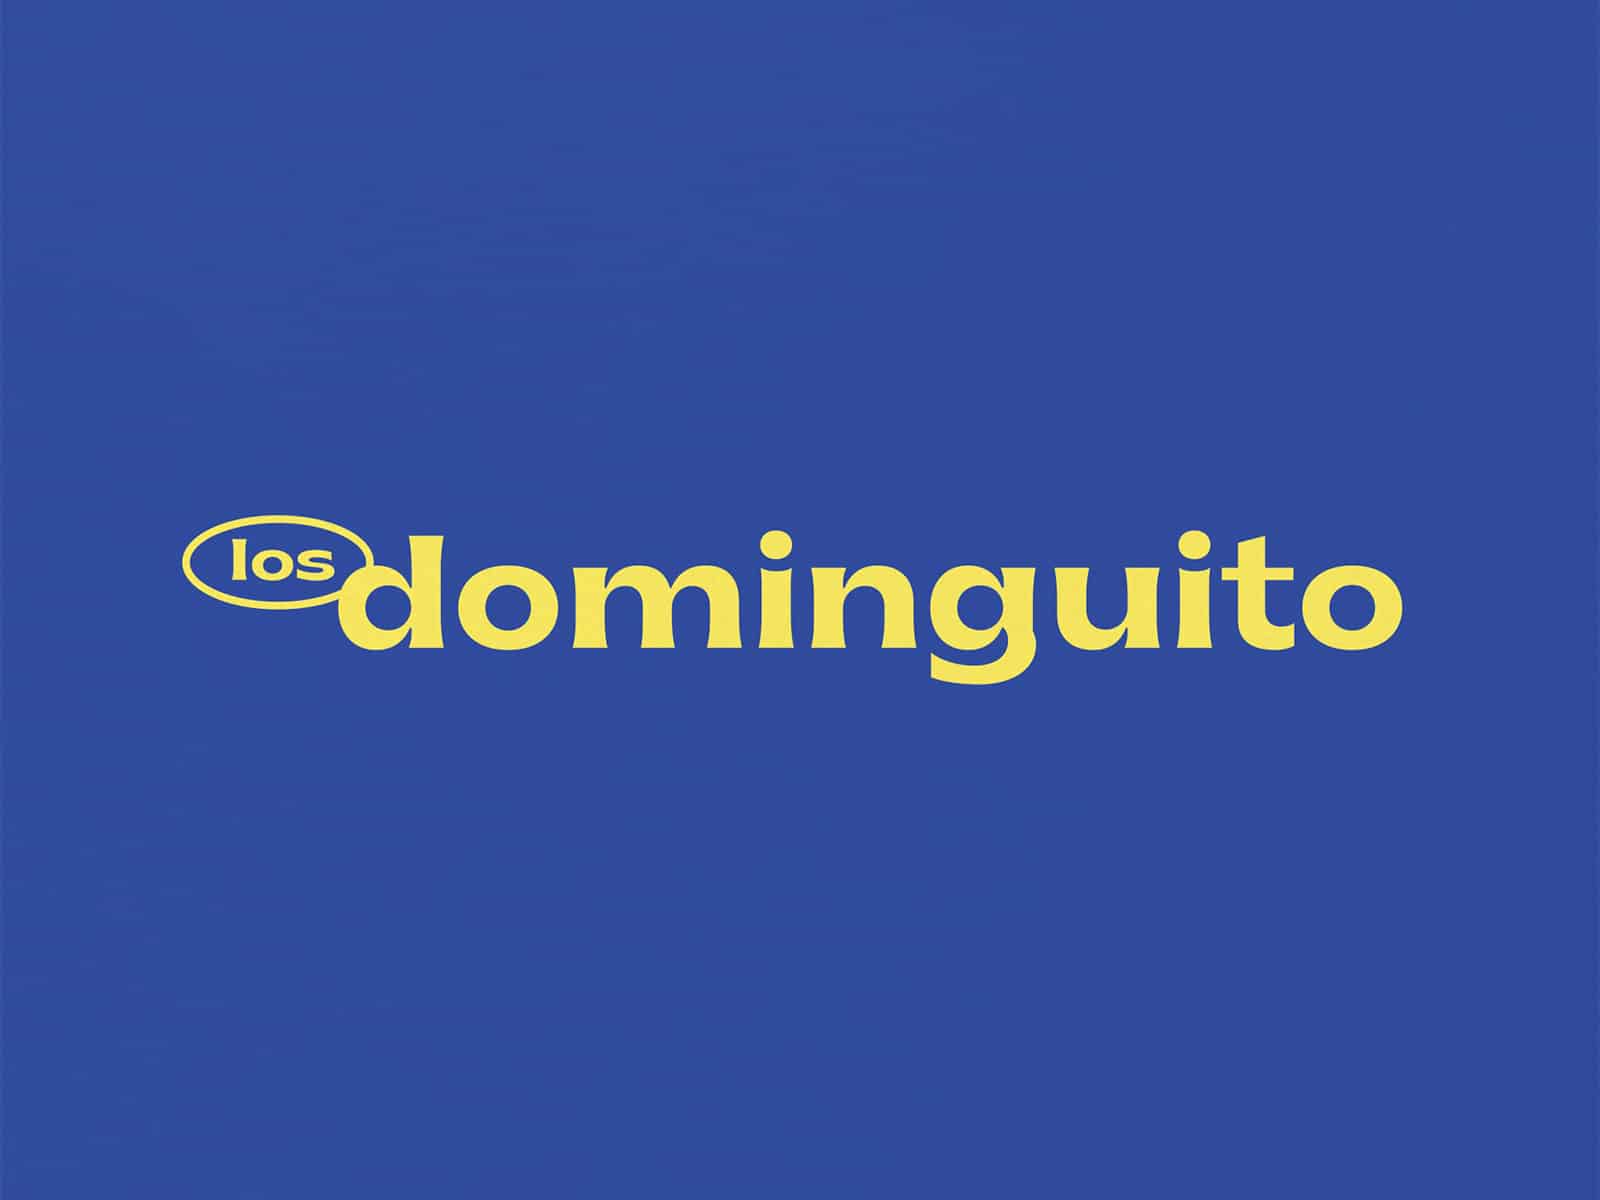 Los Dominguito are here to shake up the cultural scene